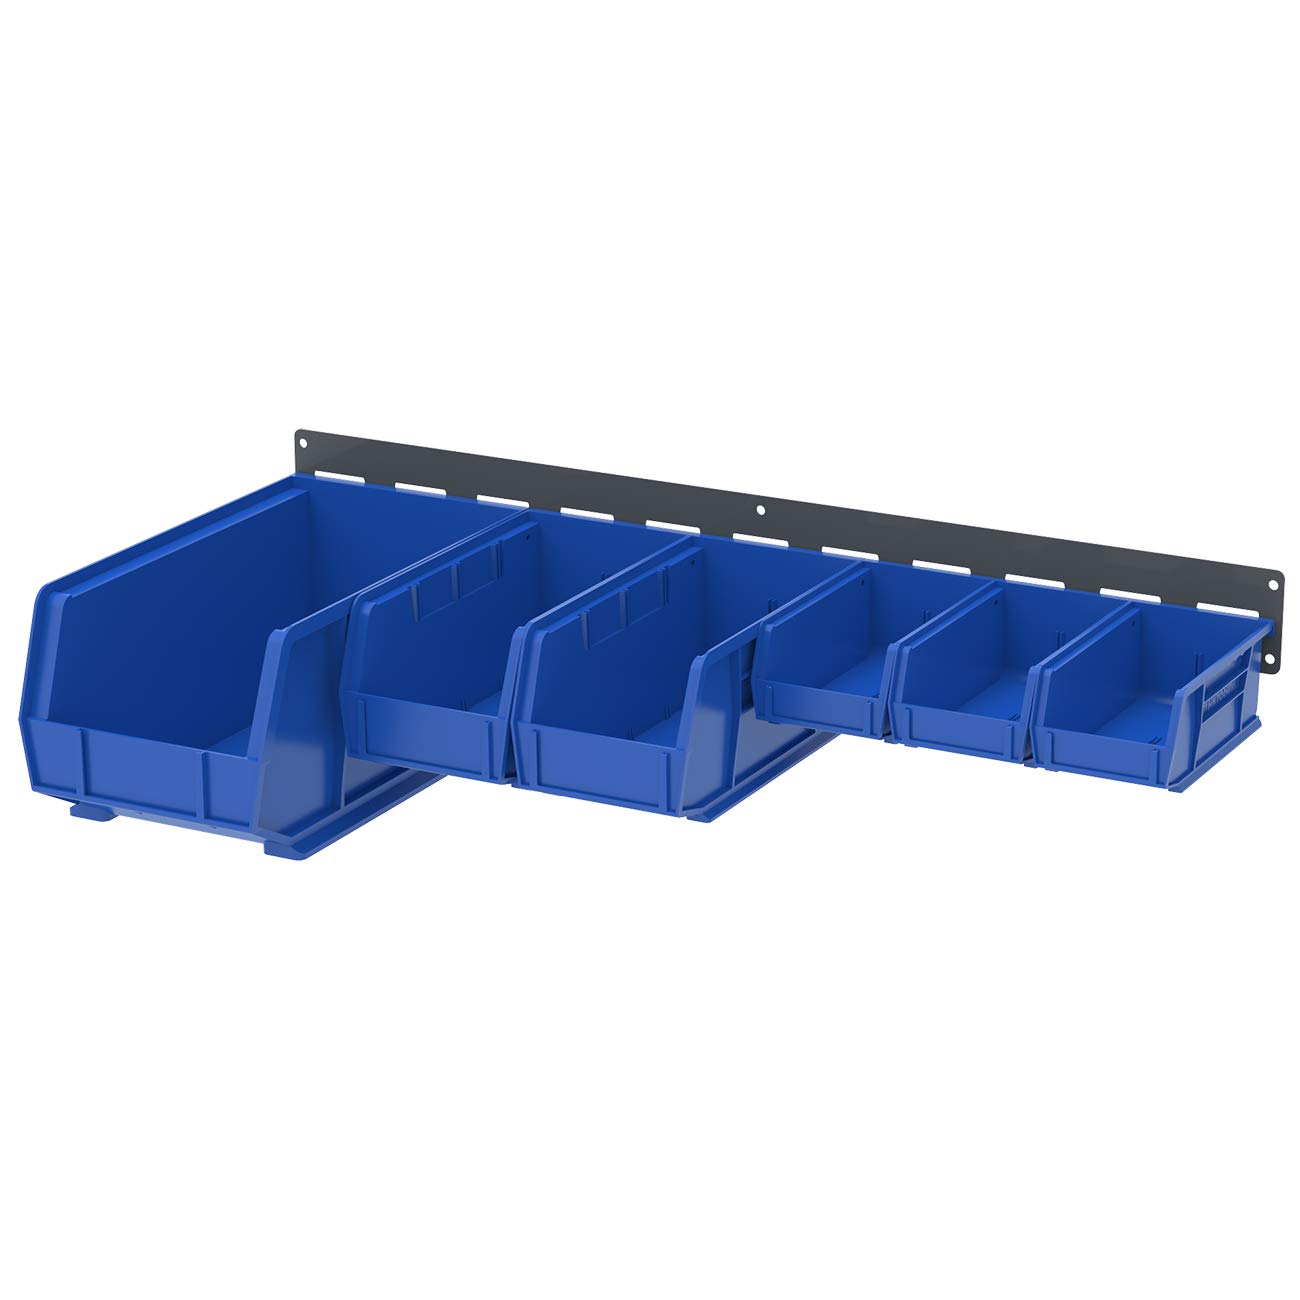 Akro-Mils 30632GY Louvered Single Row Steel Wall Panel Garage Organizer for Mounting AkroBin Storage Bins, (32-Inch W x 3-Inch H), Grey, (2-Pack)